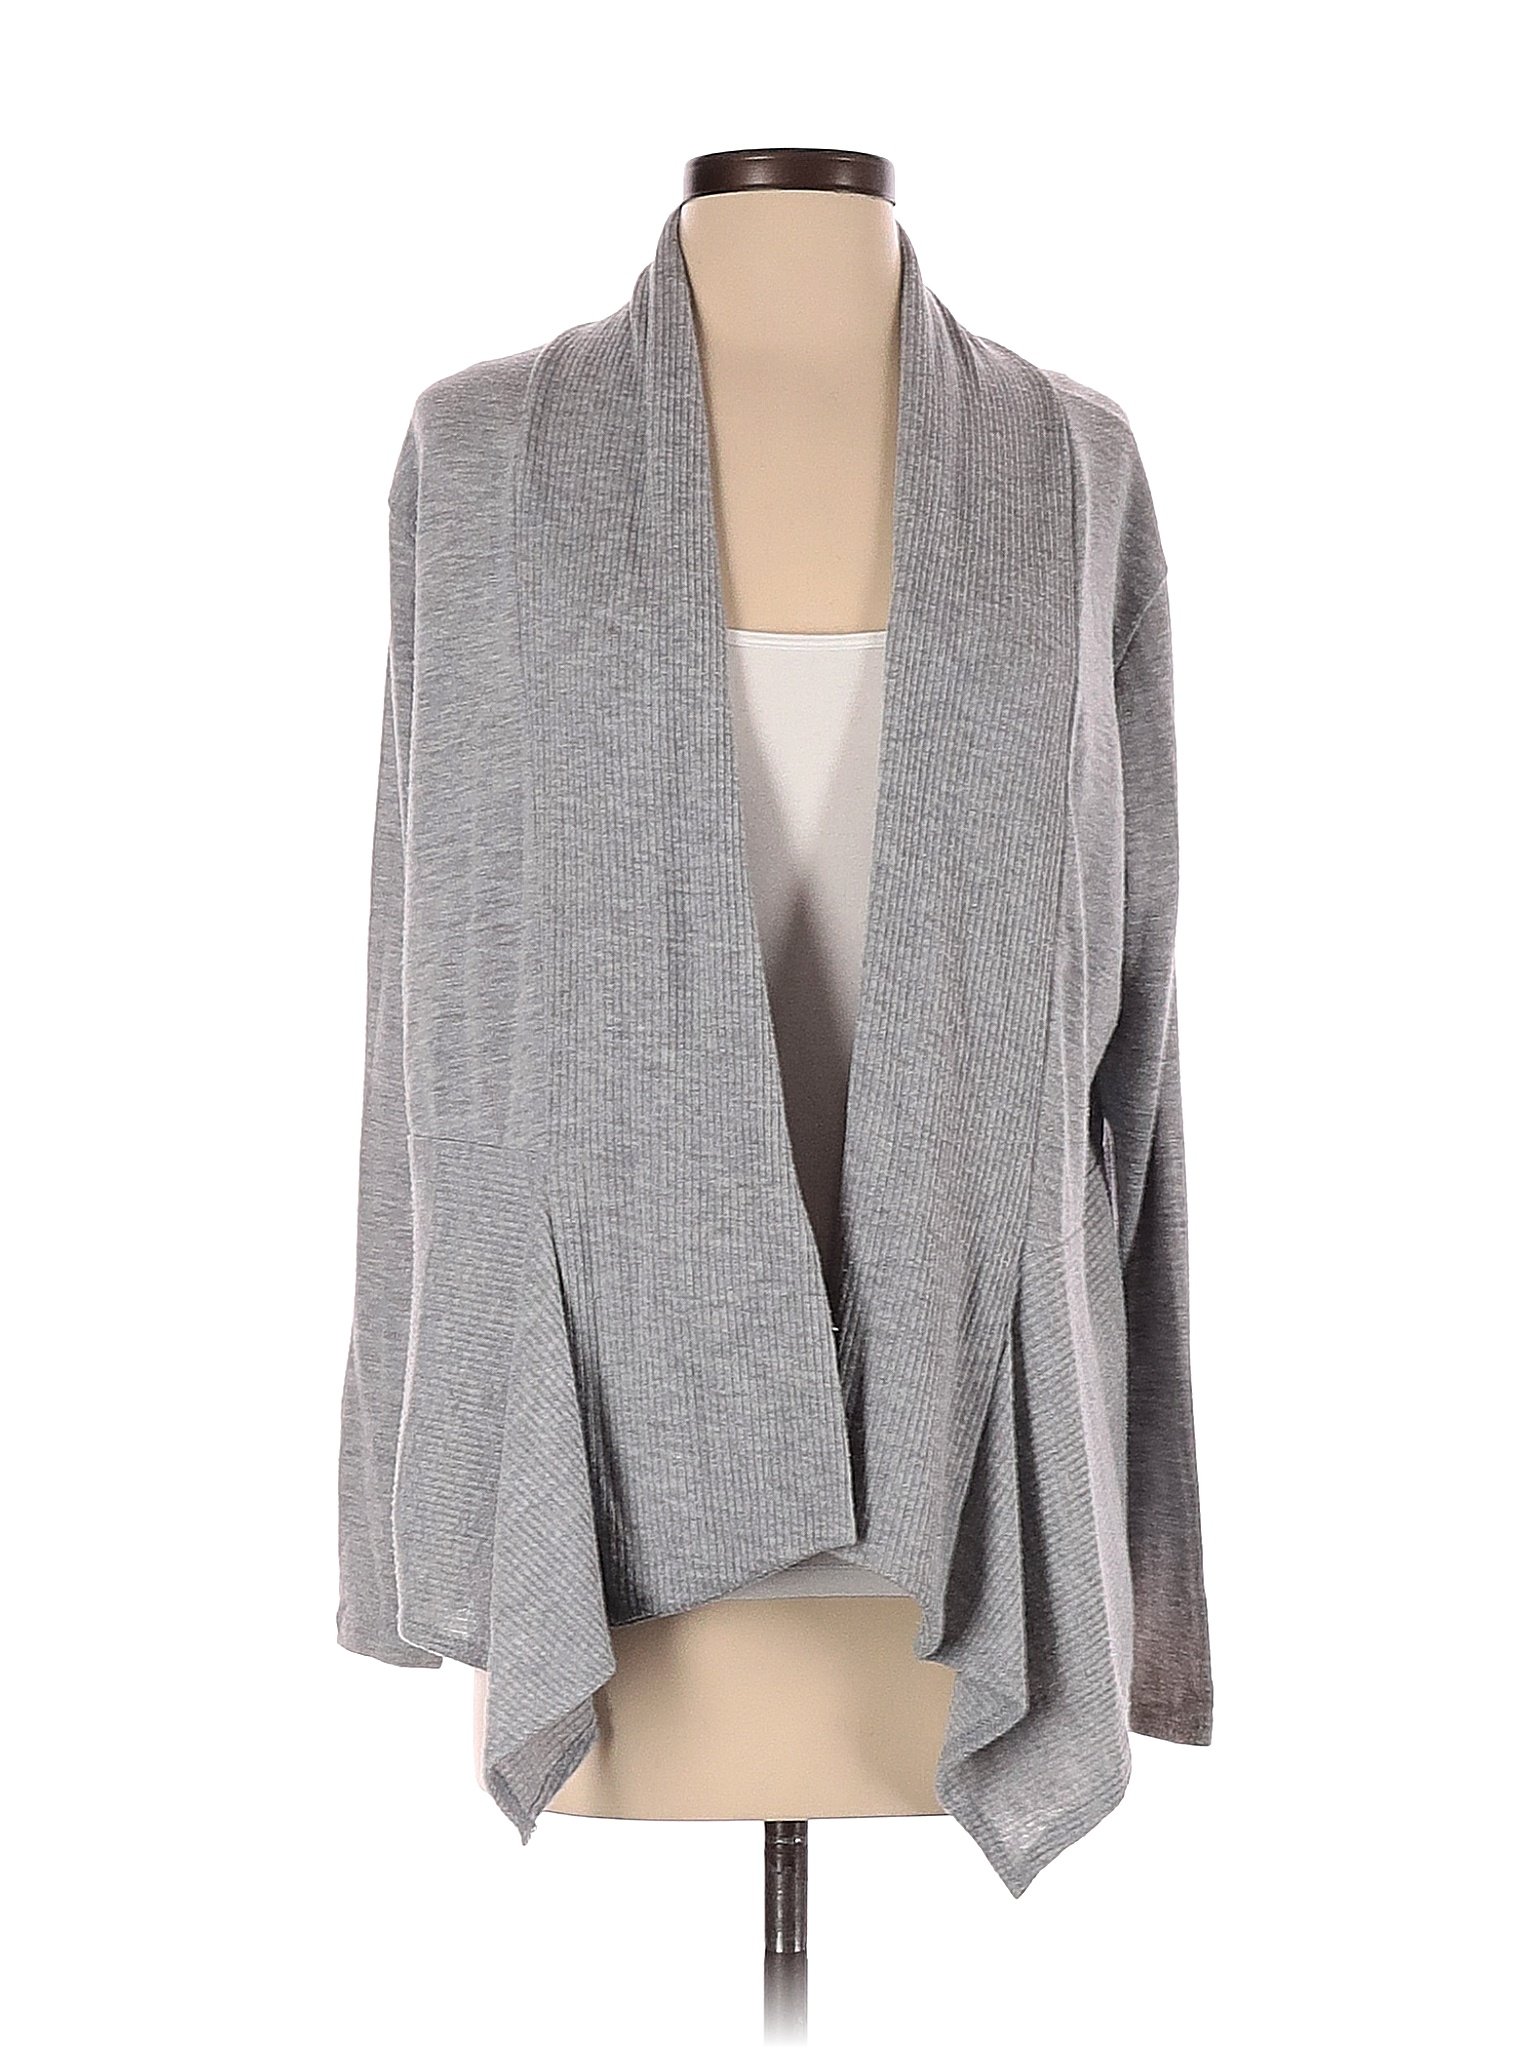 DressBarn Solid Gray Cardigan Size S (Petite) - 60% off | thredUP